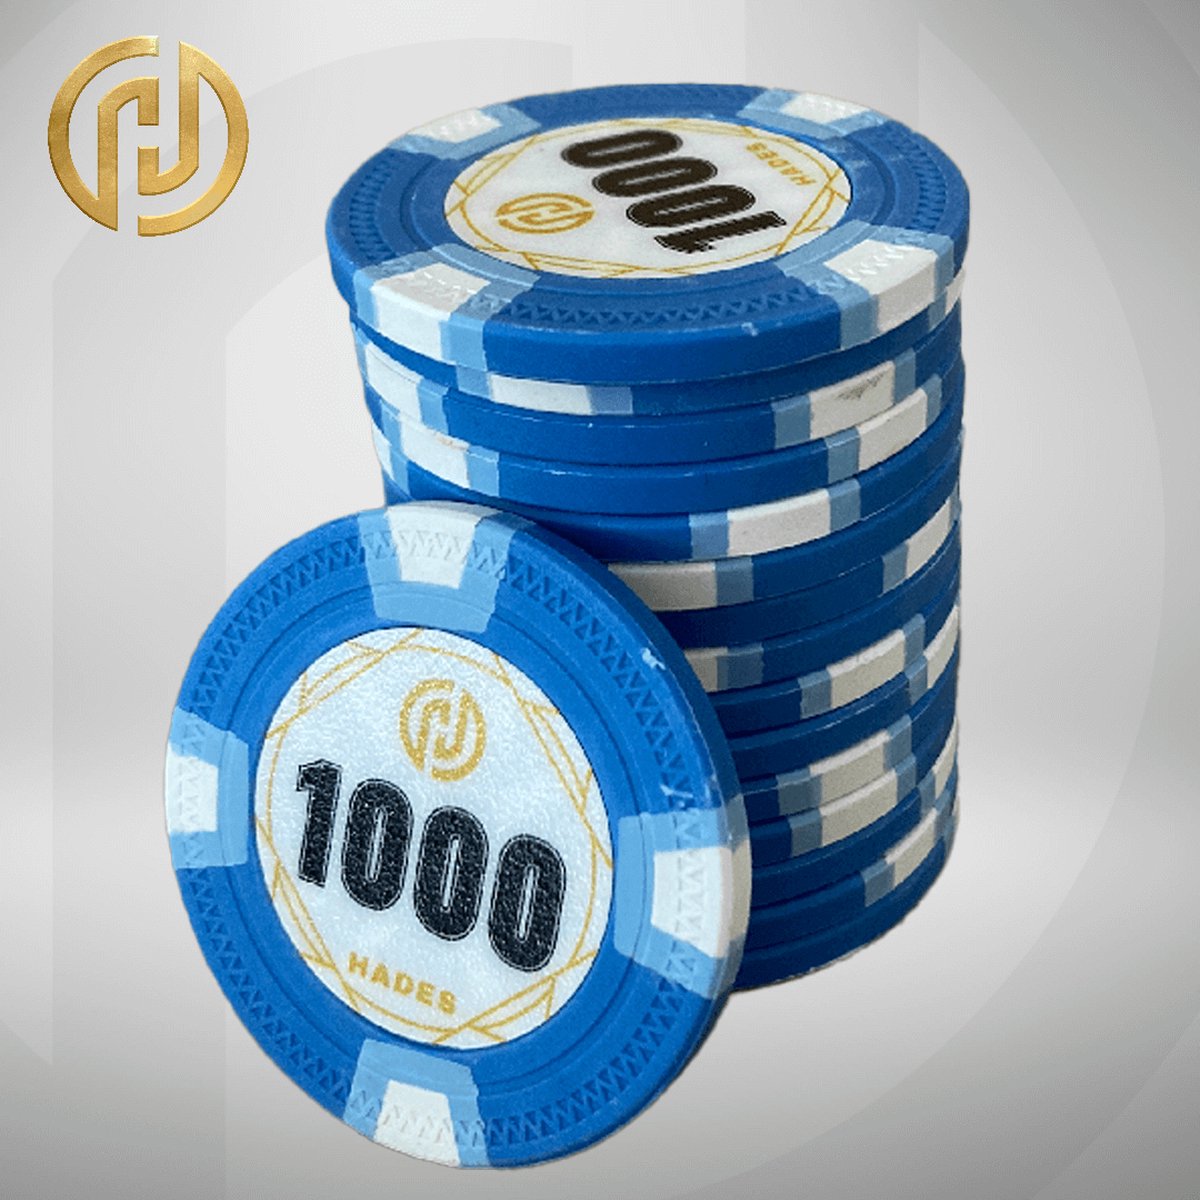 Mec Hades MTT Classic Poker Chips 1000 blauw (25 stuks) pokerchips pokerfiches poker fiches clay chips pokerspel pokerset poker set